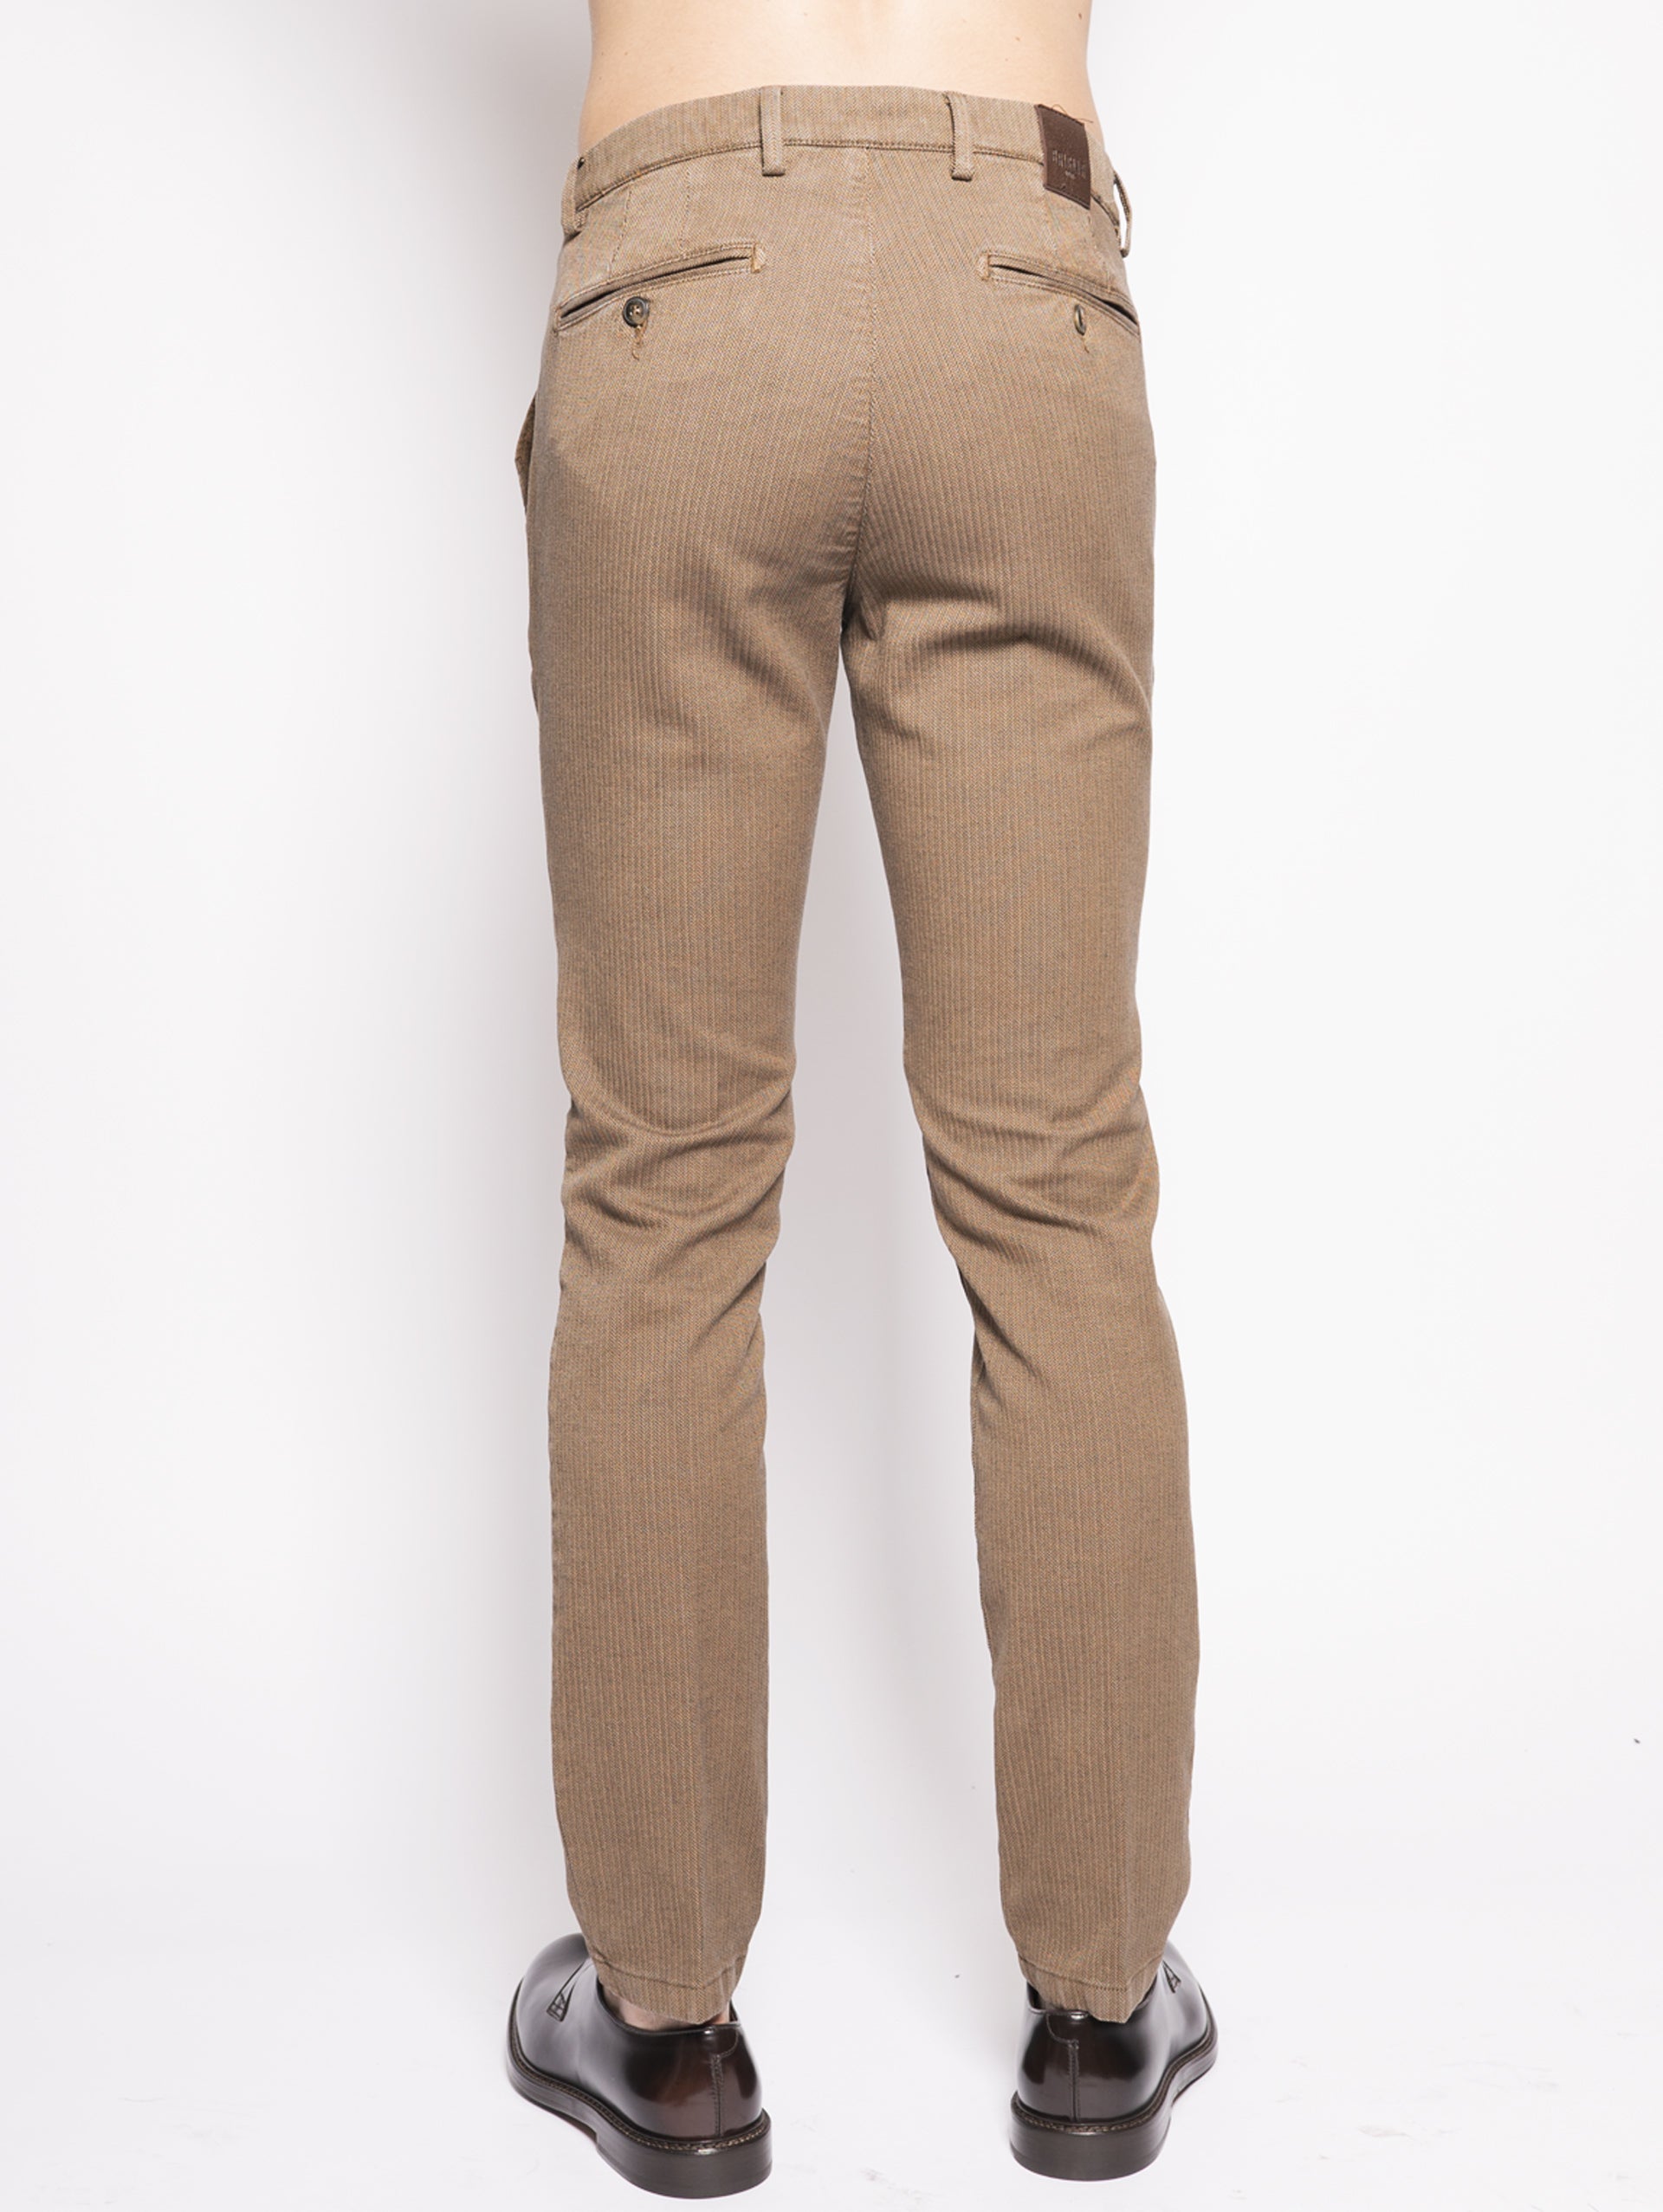 Pantalone chino spinato - BG05 Beige-Pantaloni-BRIGLIA 1949-TRYME Shop